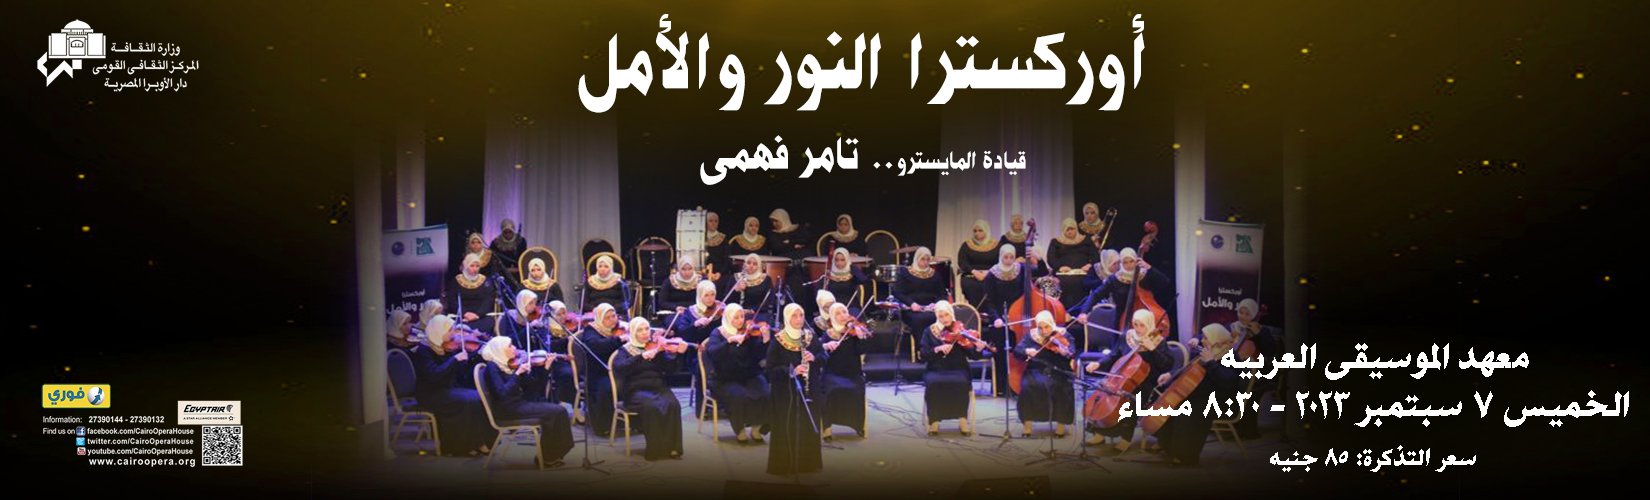 Opera Egypt